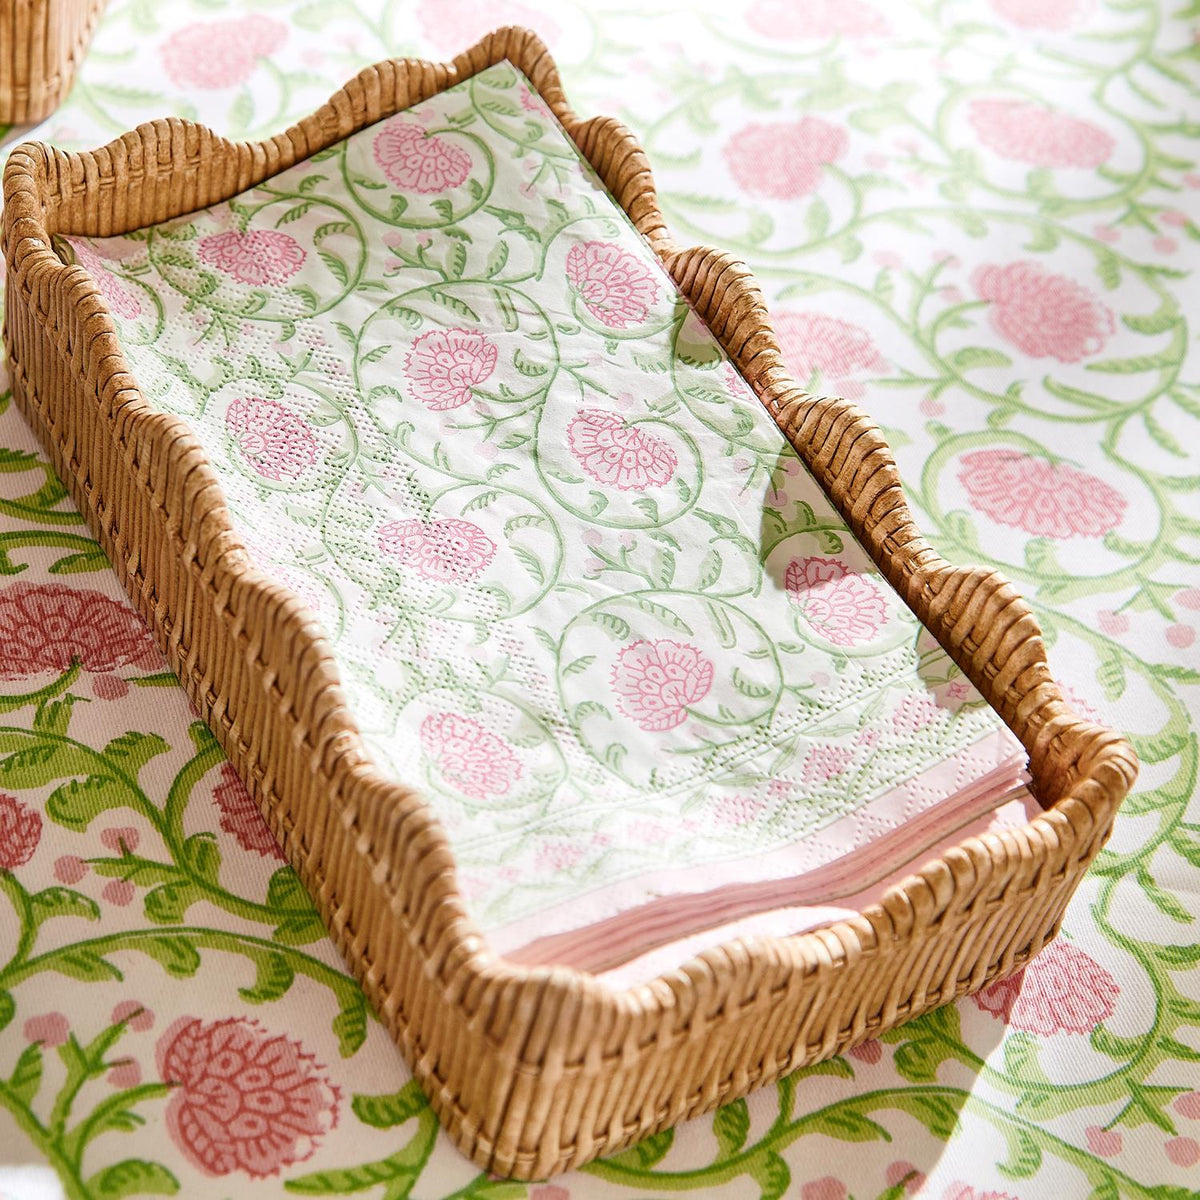 Scalloped Edge Basket Weave Pattern Guest Towel / Utensil Holder - Resin - The Preppy Bunny